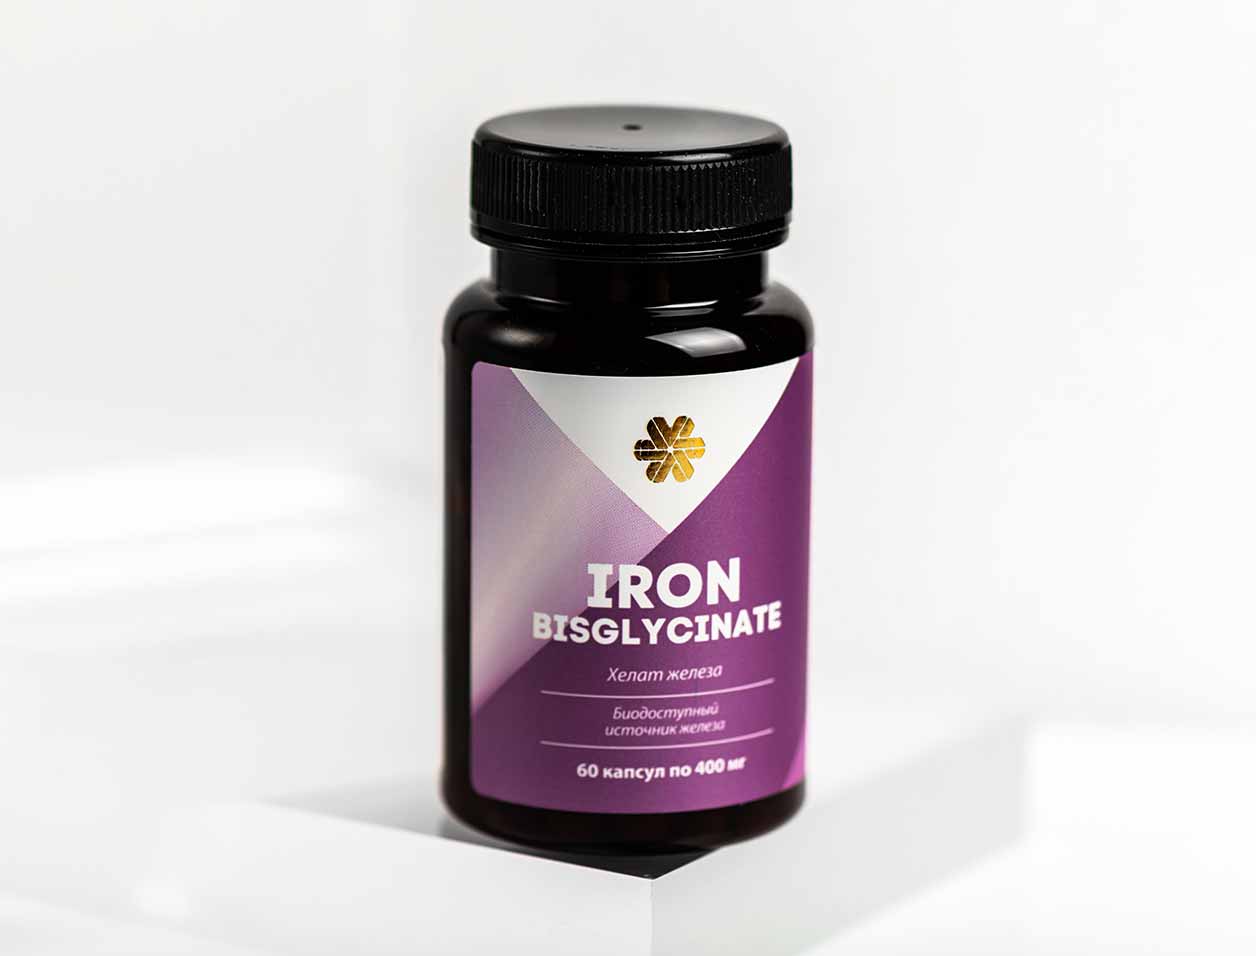 Сибирское здоровье 900. Хелат железа - women's Health. Gentle Iron (Iron Bisglycinate) капсулы инструкция.